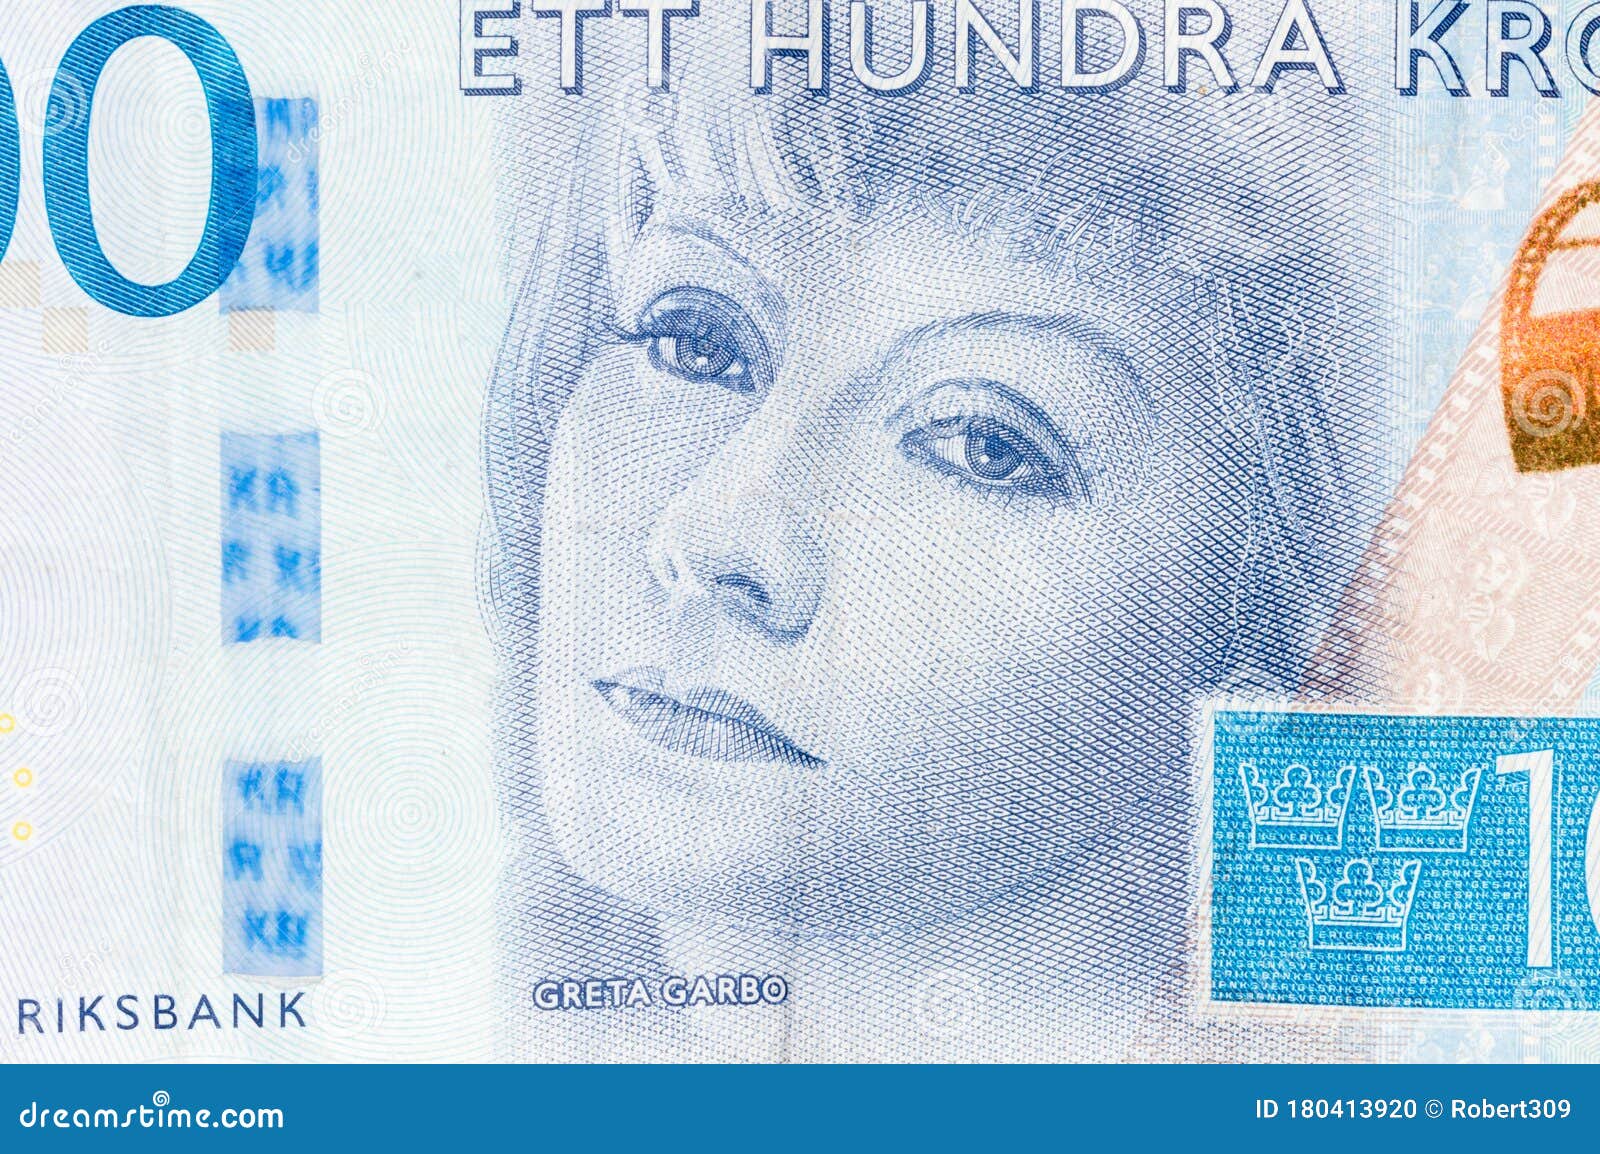 greta garbo portrait on swedish krona banknote